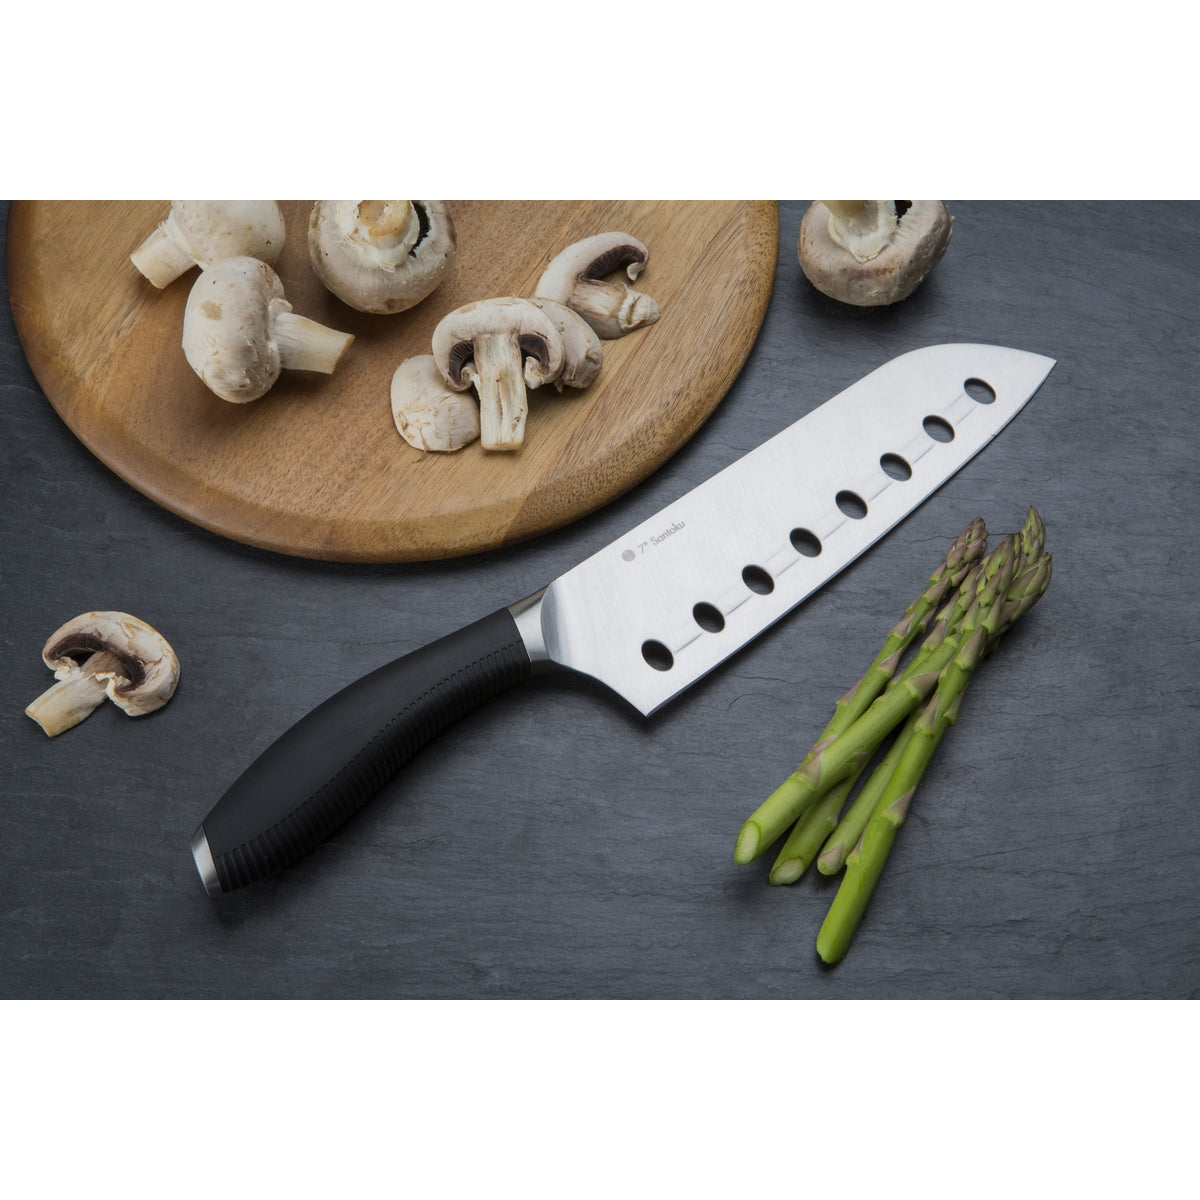 Santoku Knife with asparagus and sliced mushrooms.